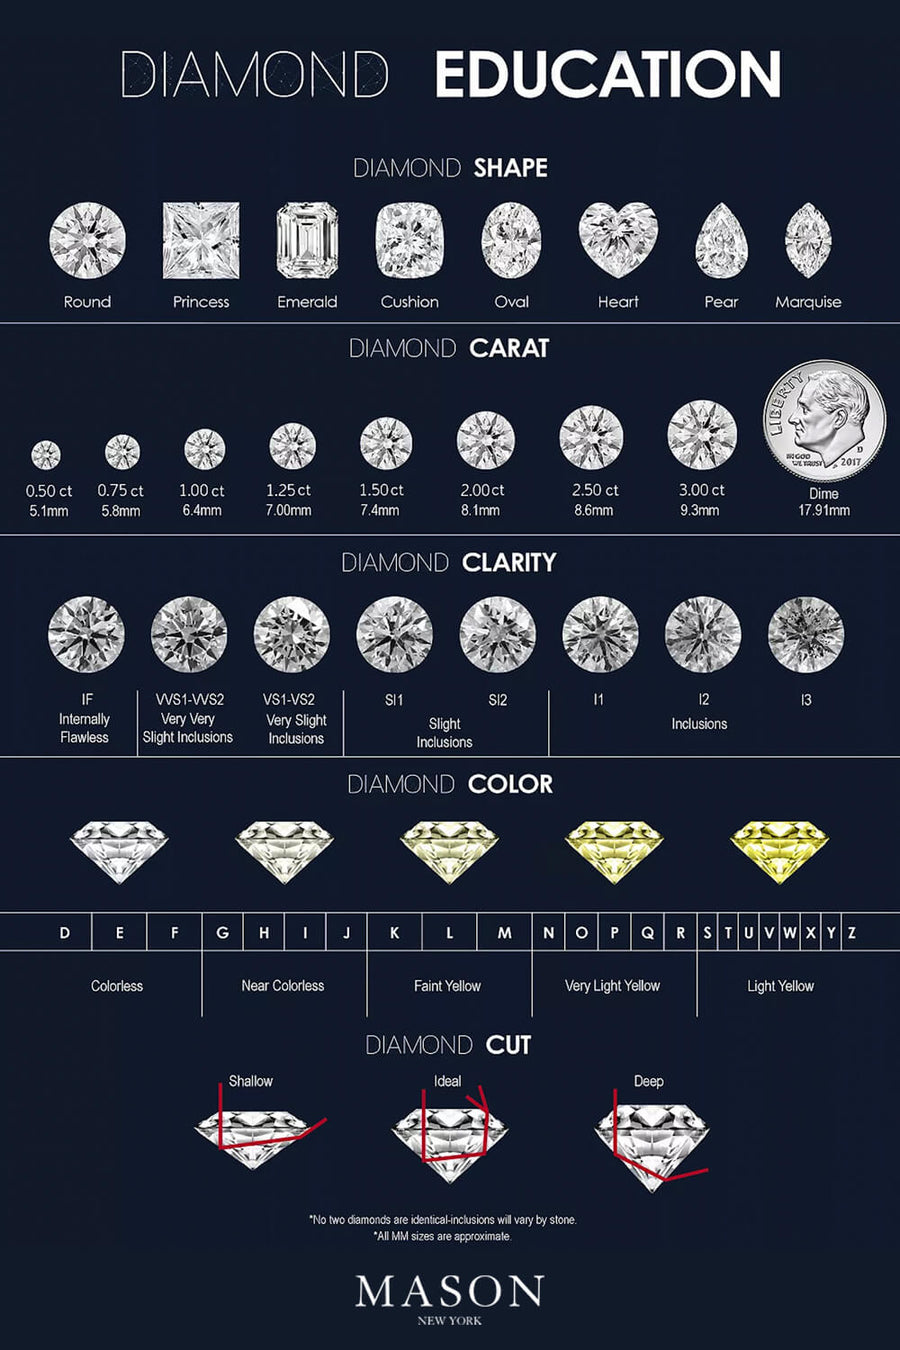 1 Carat Diamond Ring - Need You Now